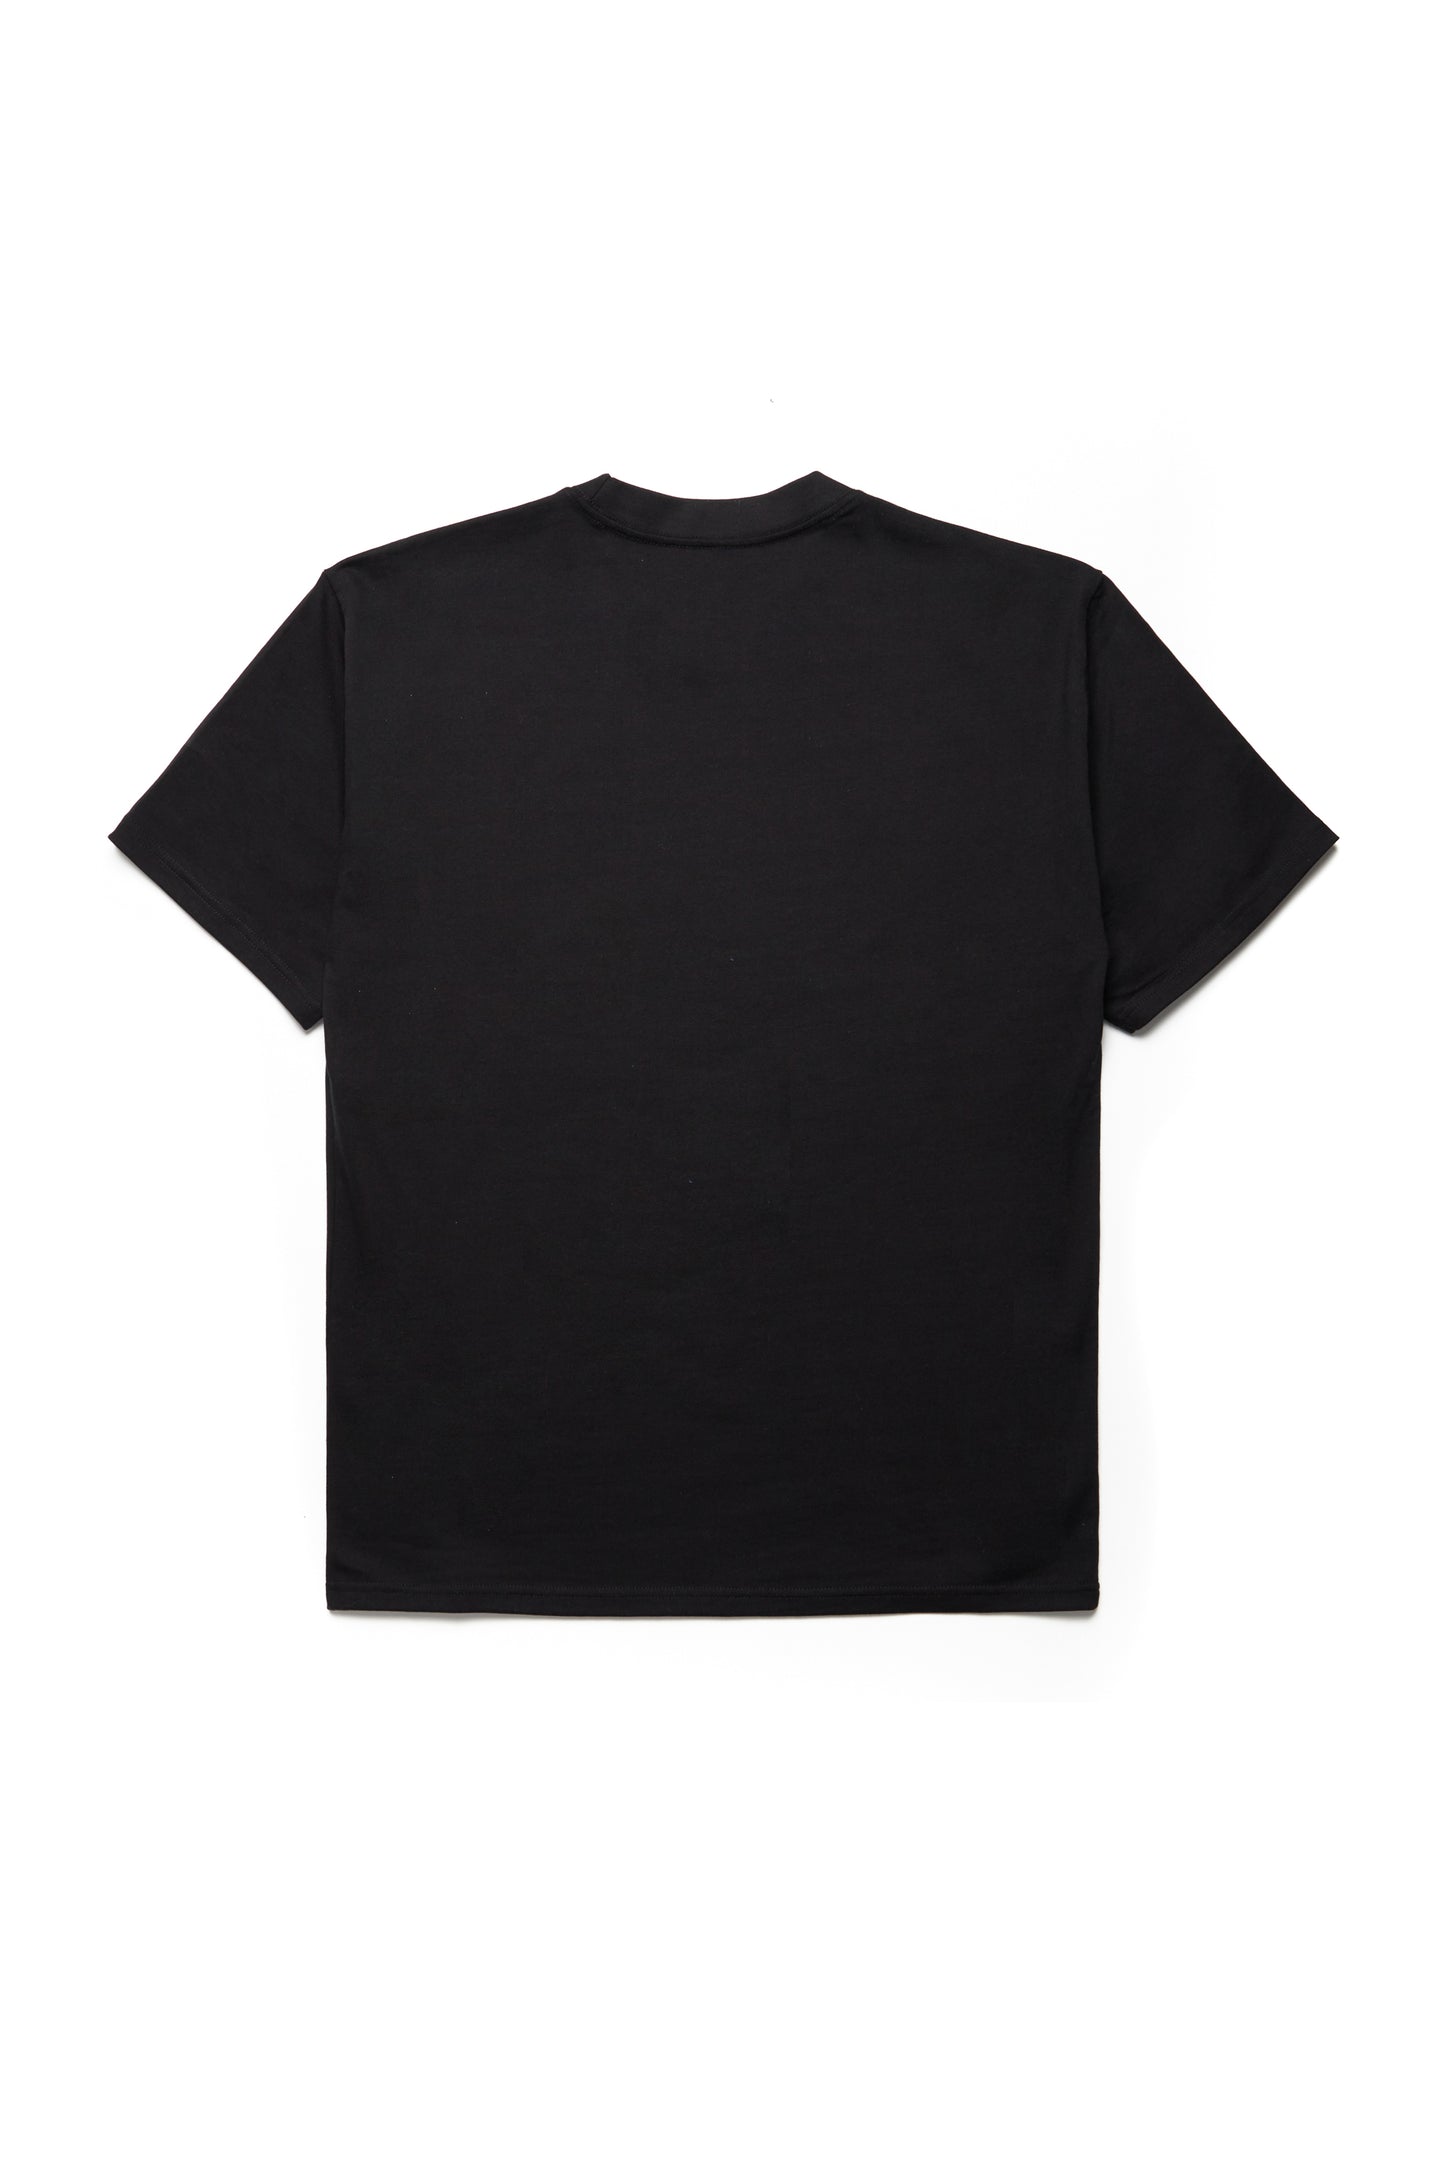 Pangaea x Matte Black R32 T-Shirt